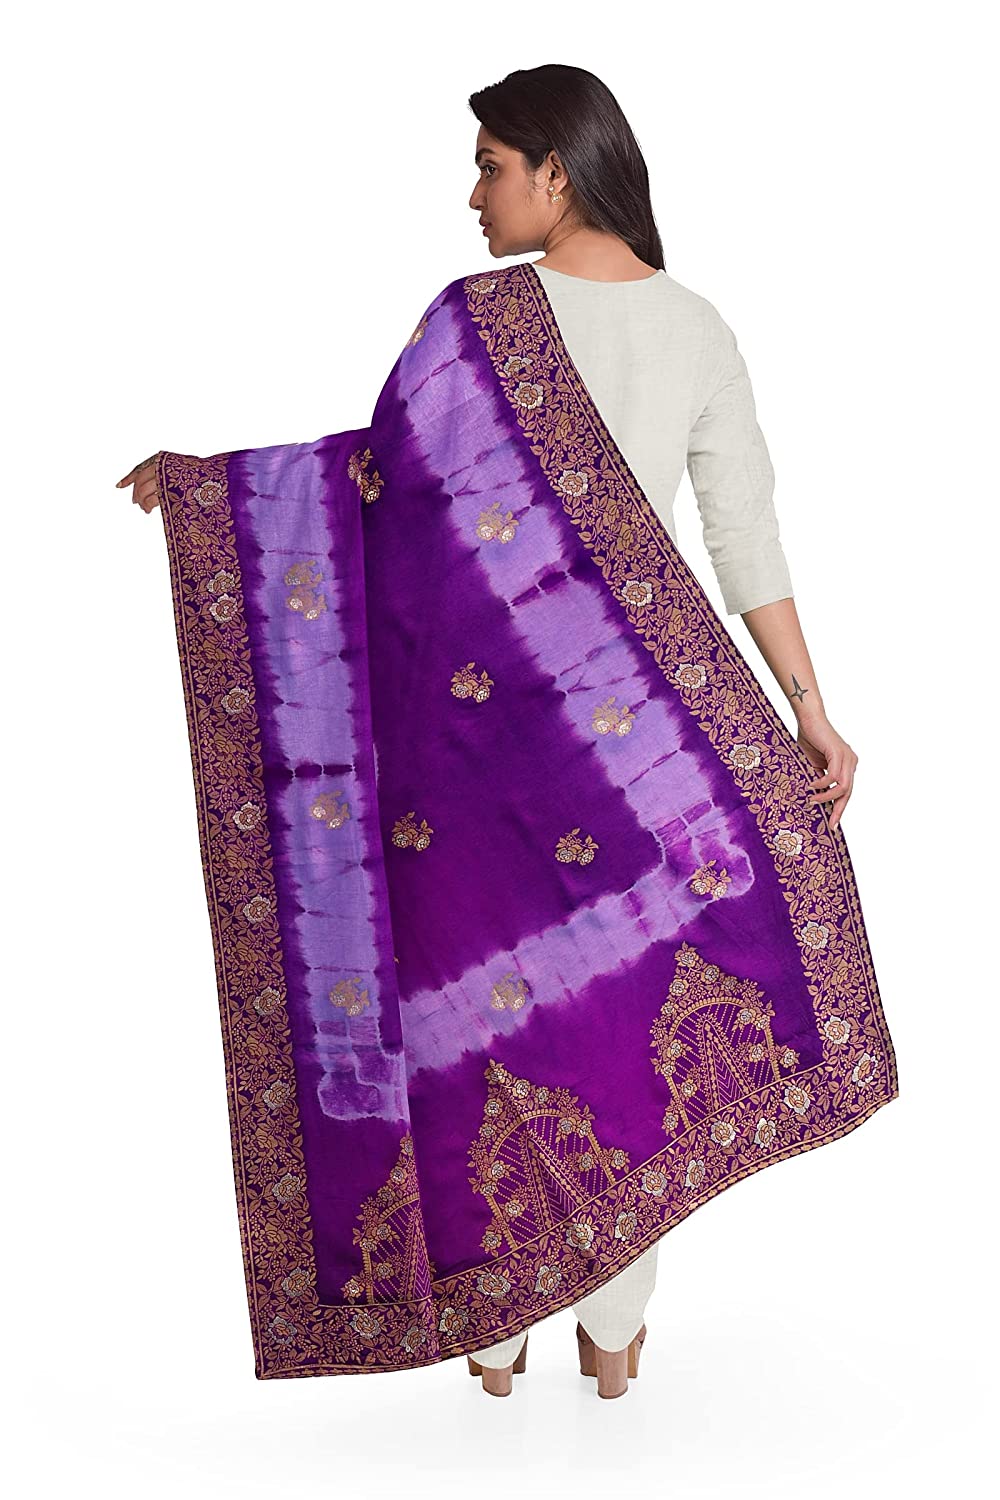 VOGZY.COM Beautiful Silk Dupatta With Plain Weave N Border For Women Free Size, Violet Color